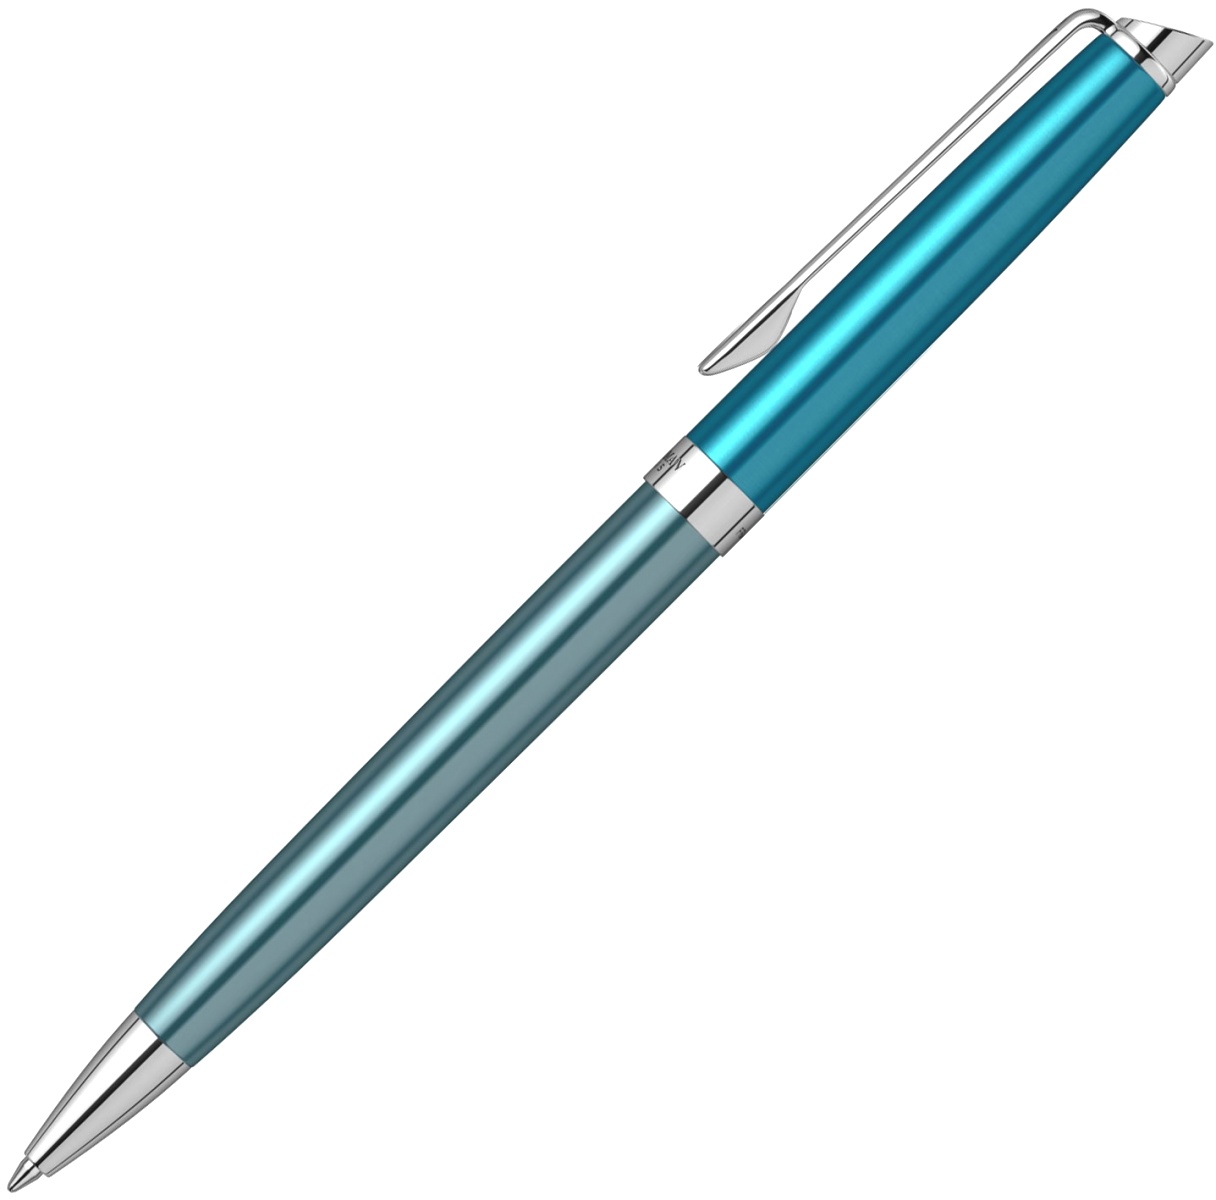  Шариковая ручка Waterman Hemisphere 2020, Sea Blue CT, фото 2